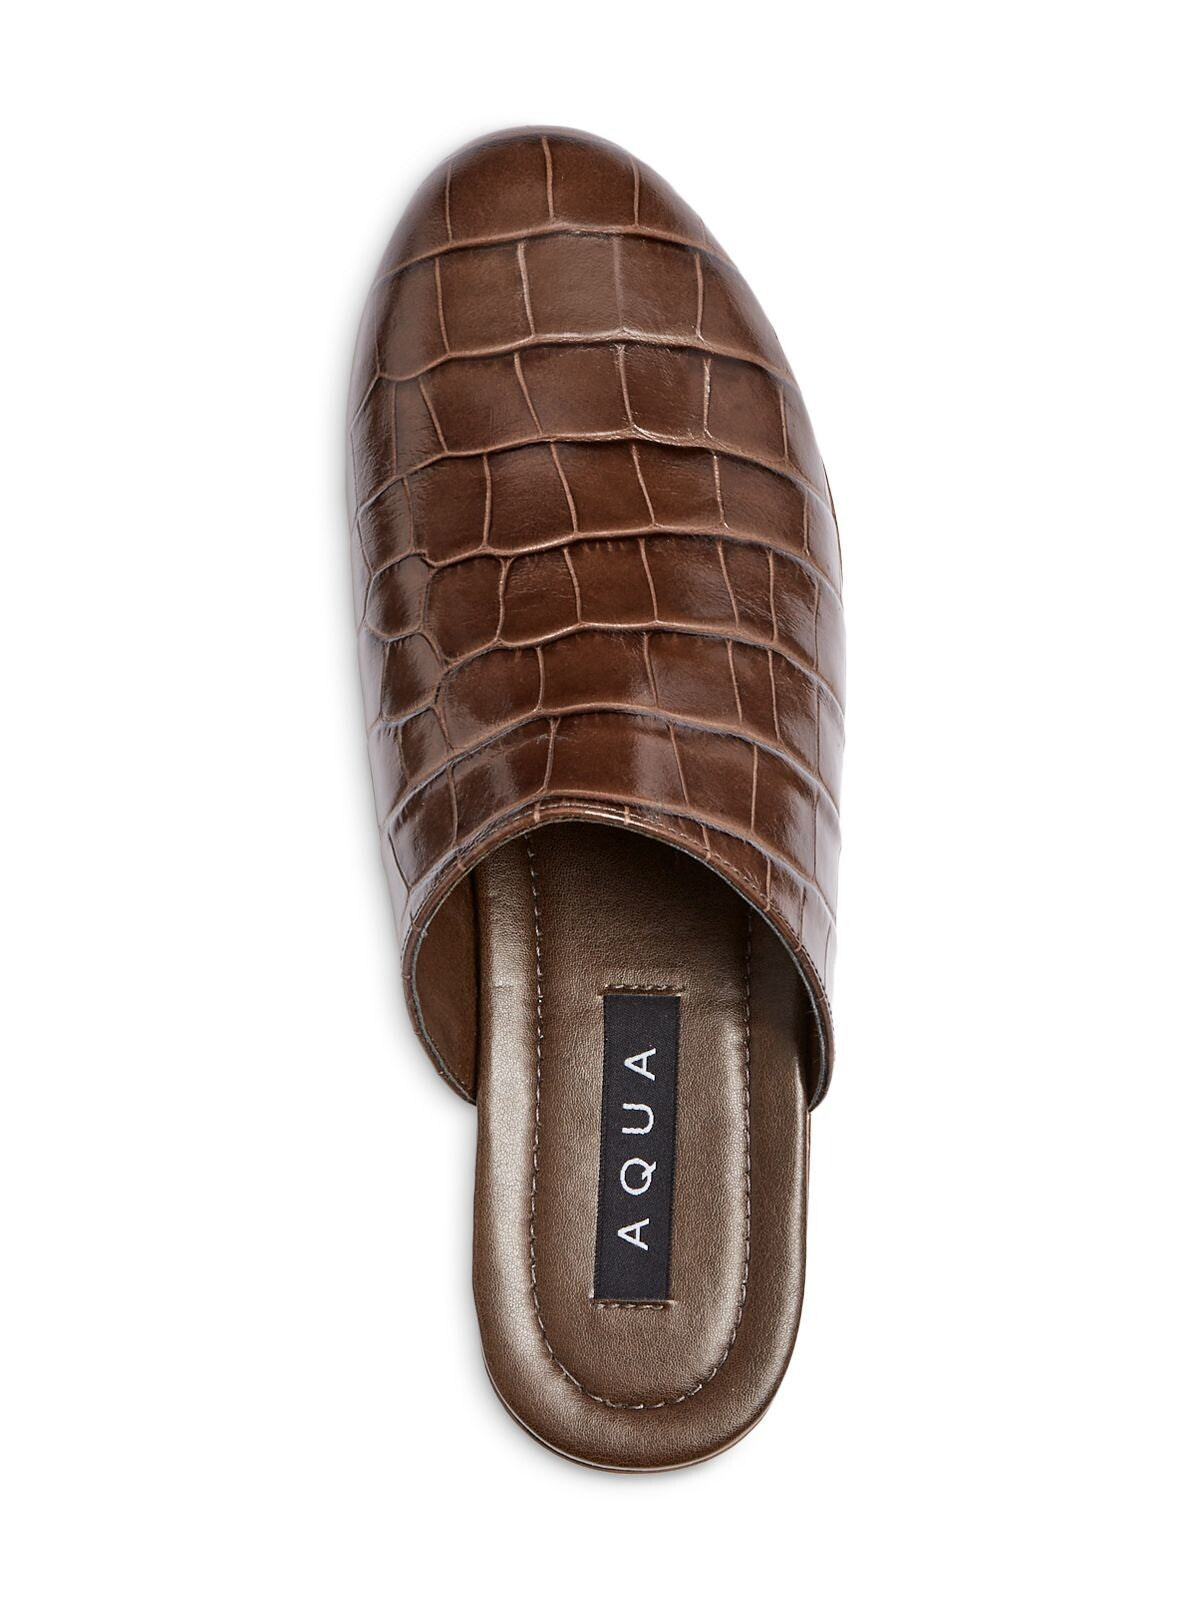 AQUA Womens Brown Crocodile Comfort Round Toe Block Heel Slip On Leather Clogs Shoes 10